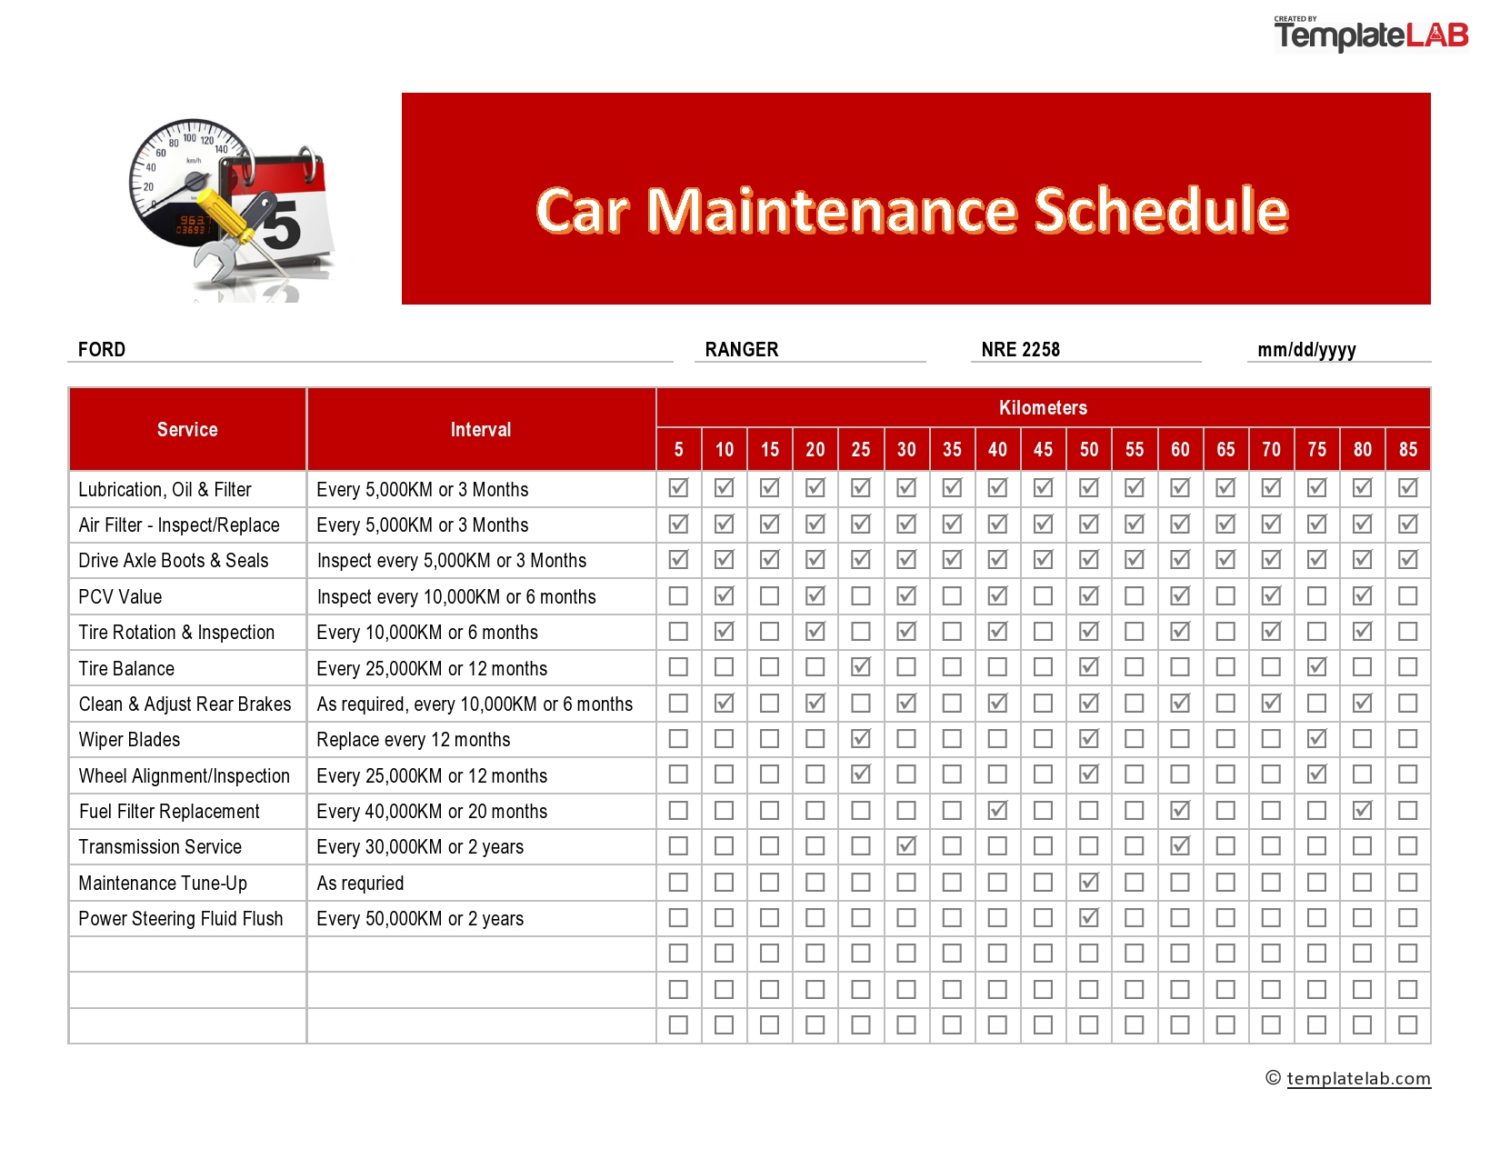 43-printable-vehicle-maintenance-log-templates-templatelab